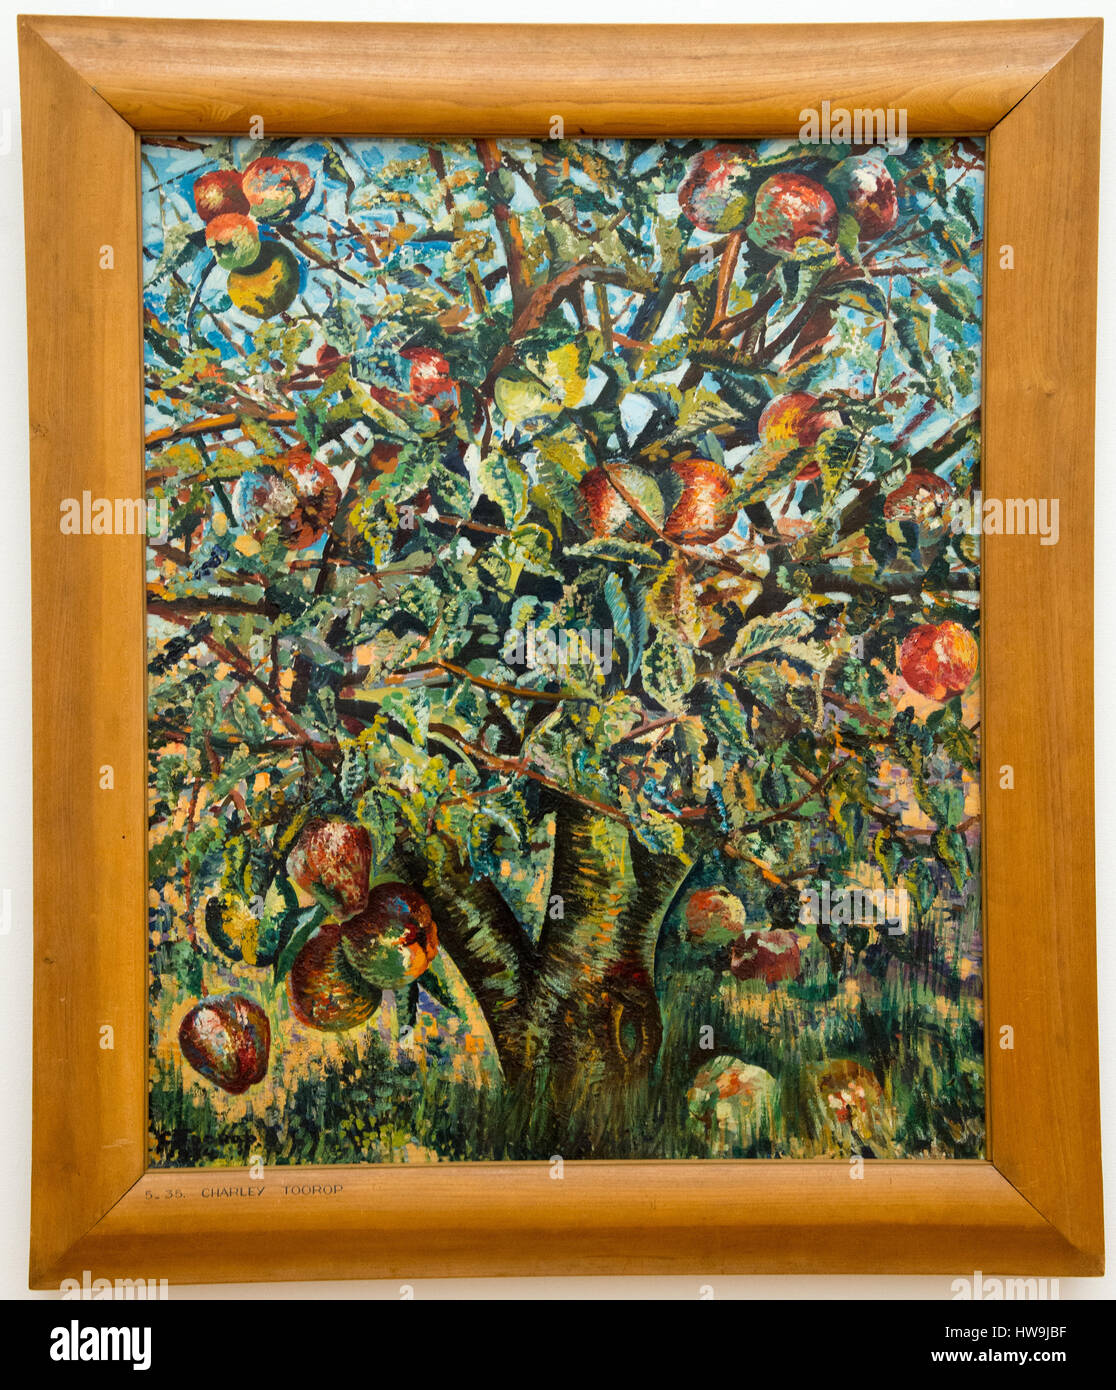 Gemälde "the Apple Tree" von Charley toorop Stockfoto